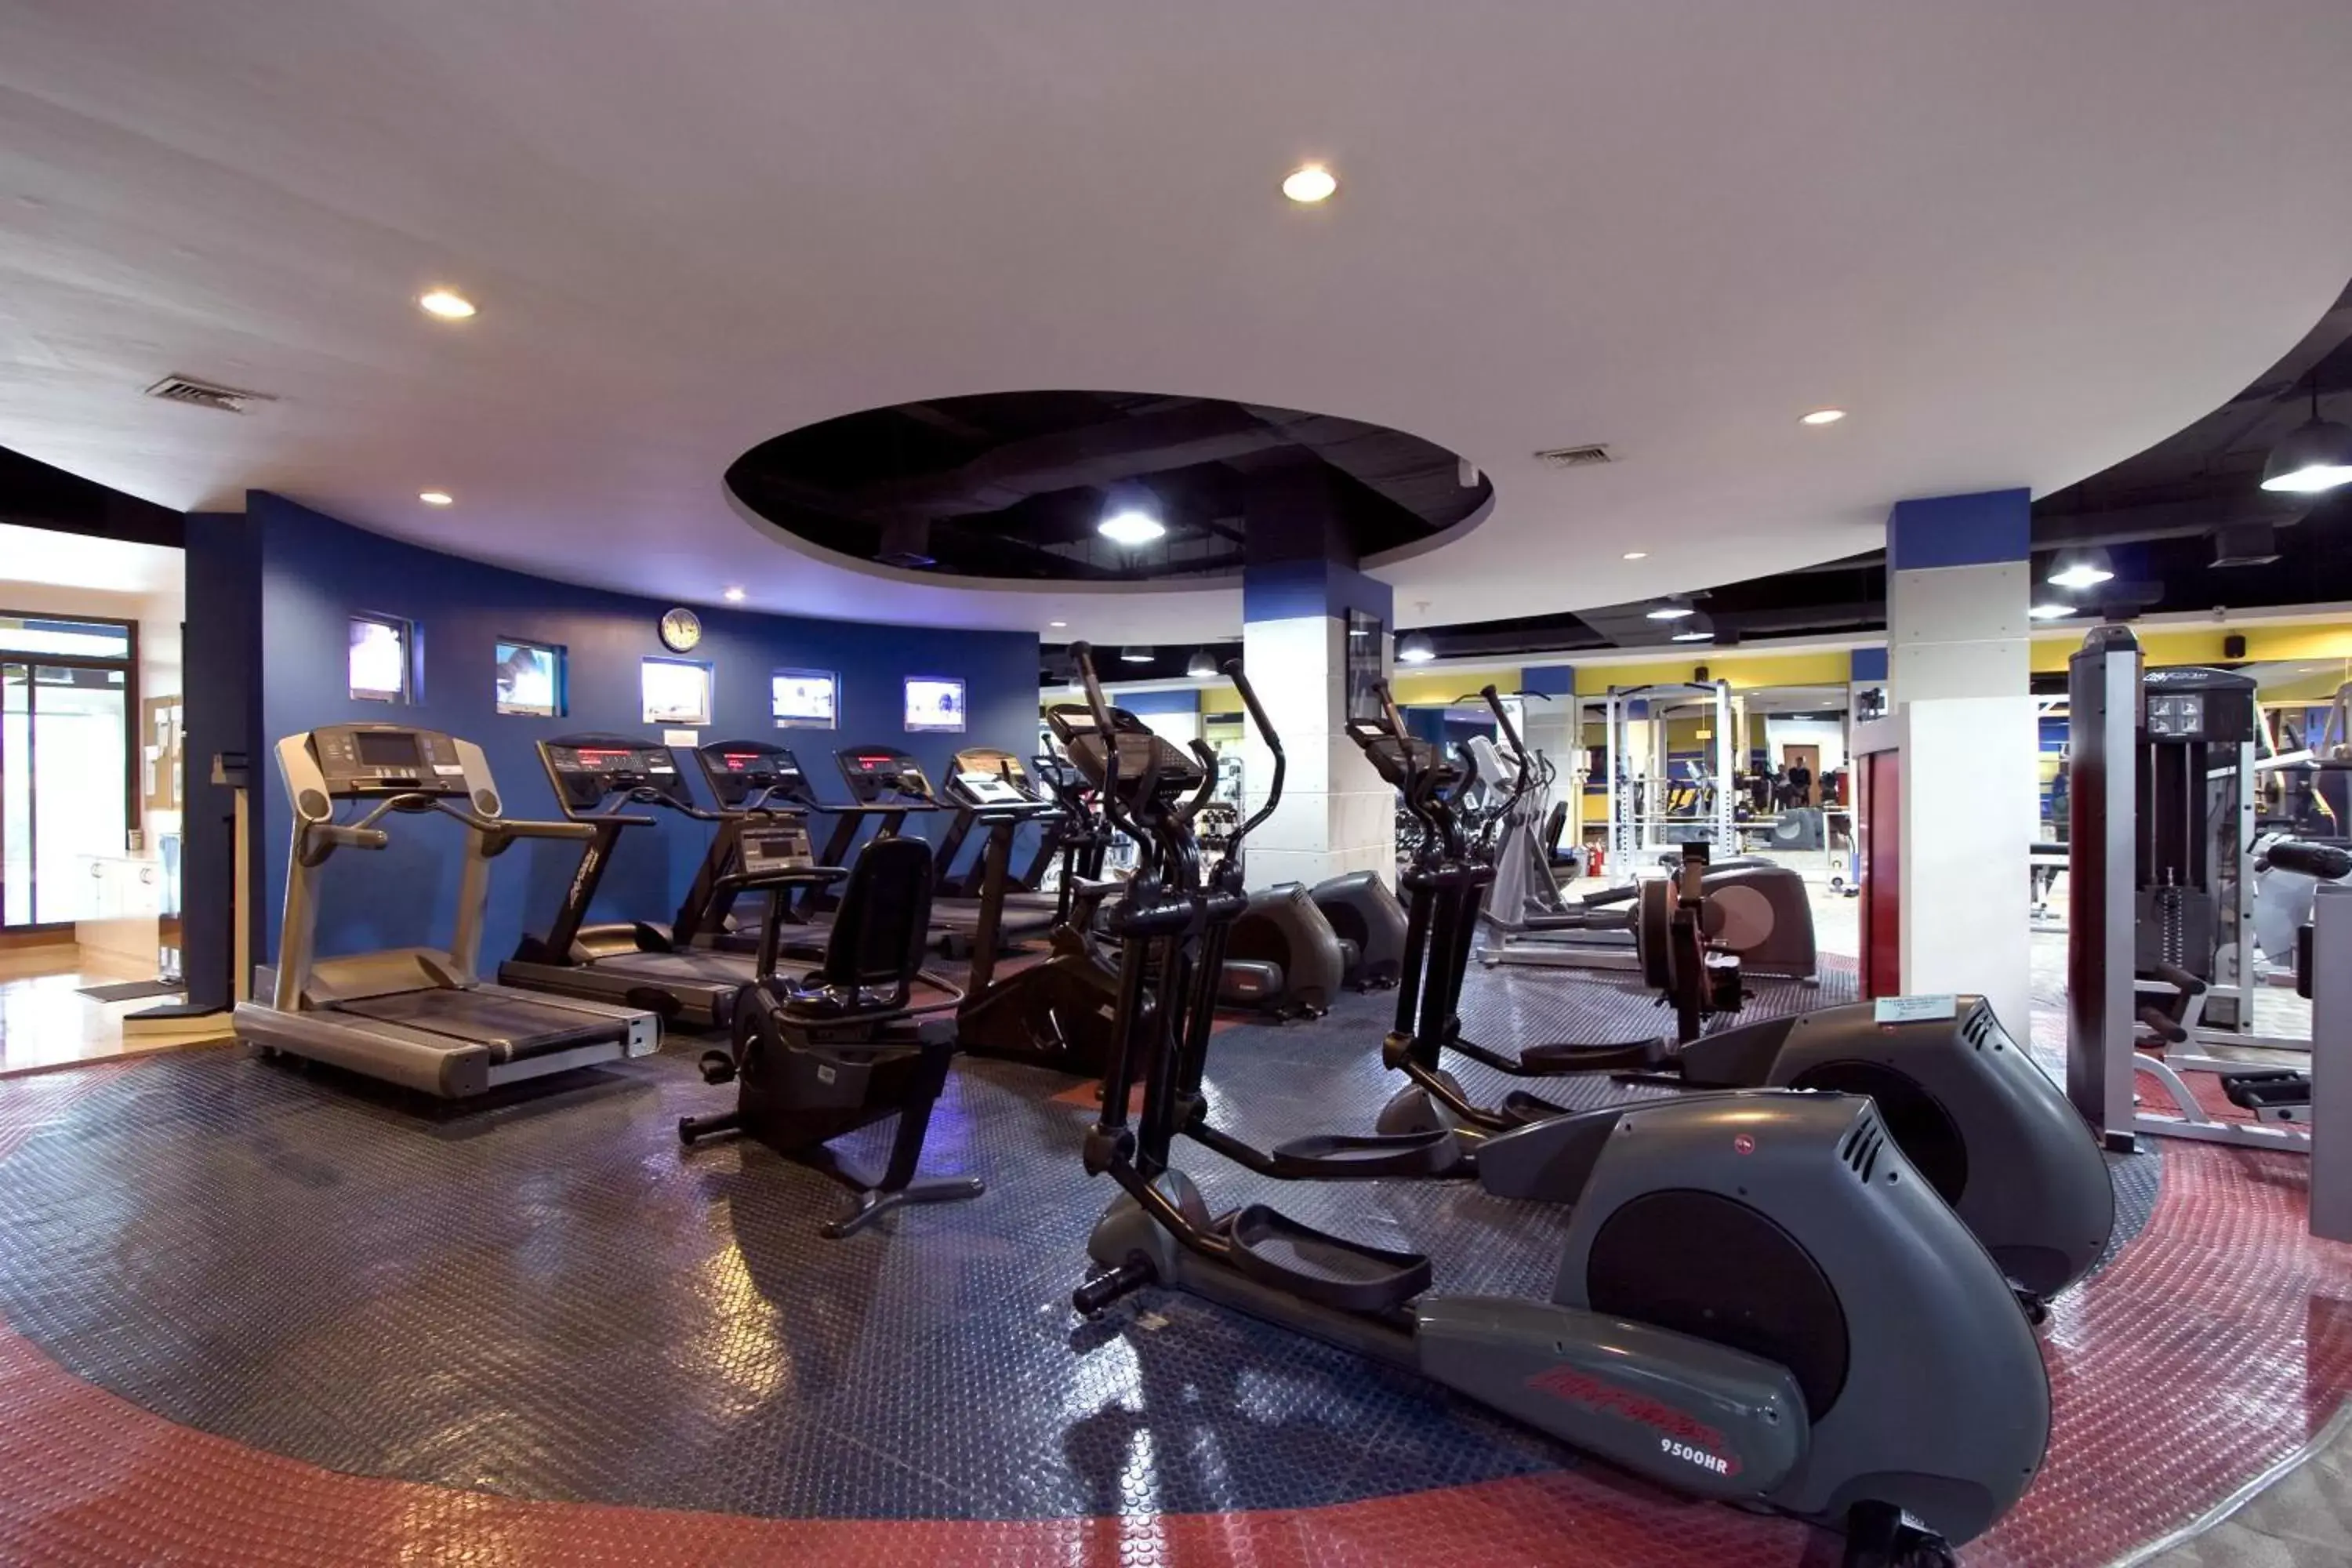 Fitness centre/facilities, Fitness Center/Facilities in Waterfront Cebu City Hotel & Casino